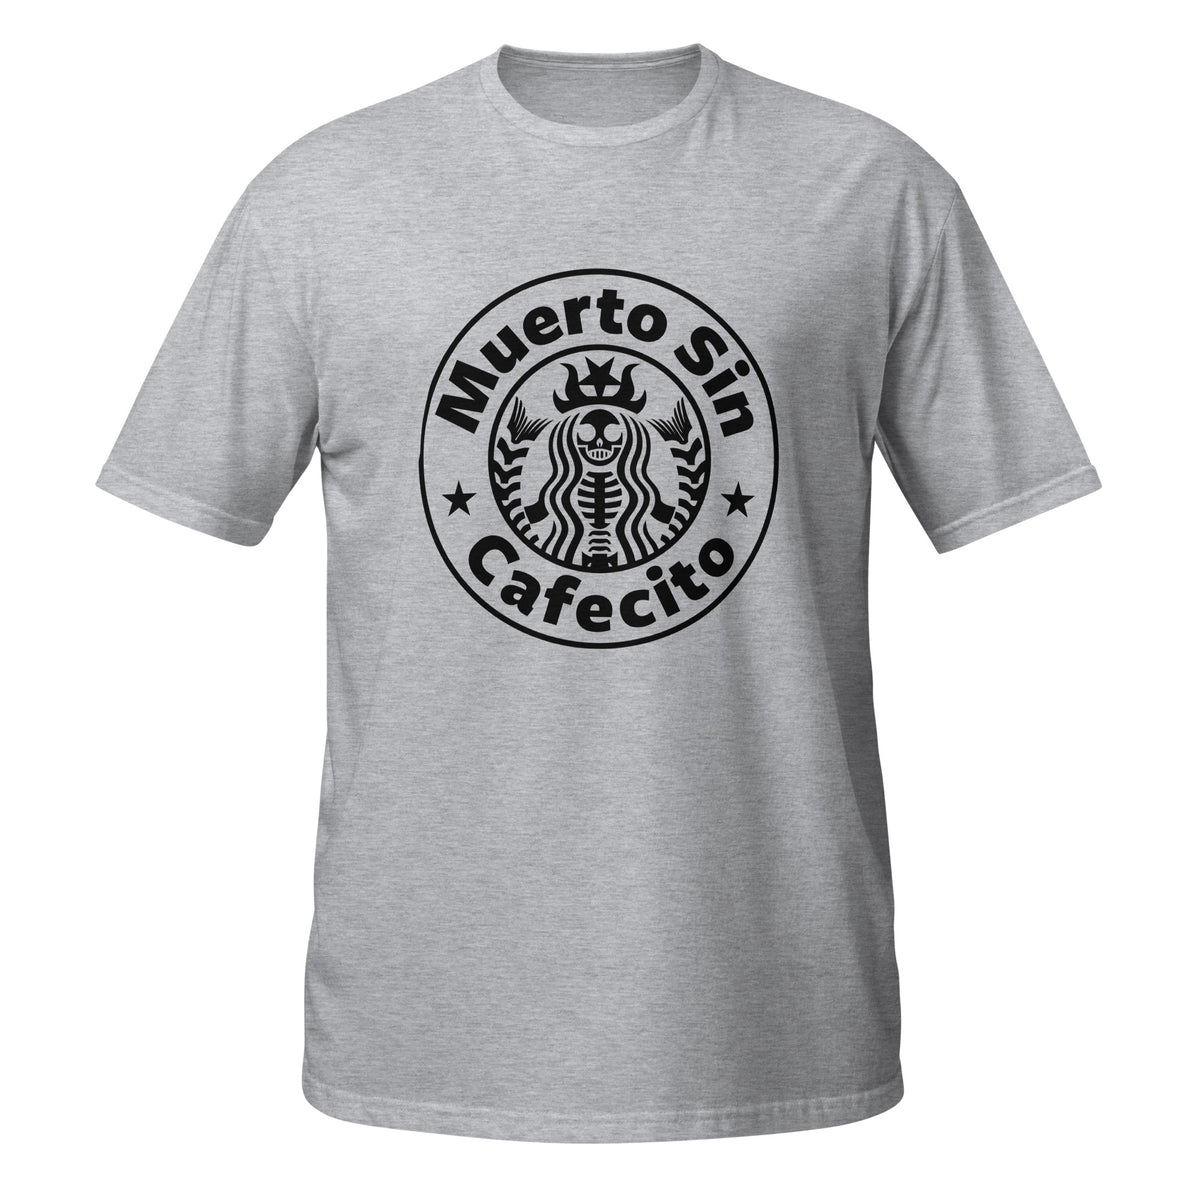 Muerto Sin Cafecito T-Shirt (Dead w/o Coffee)